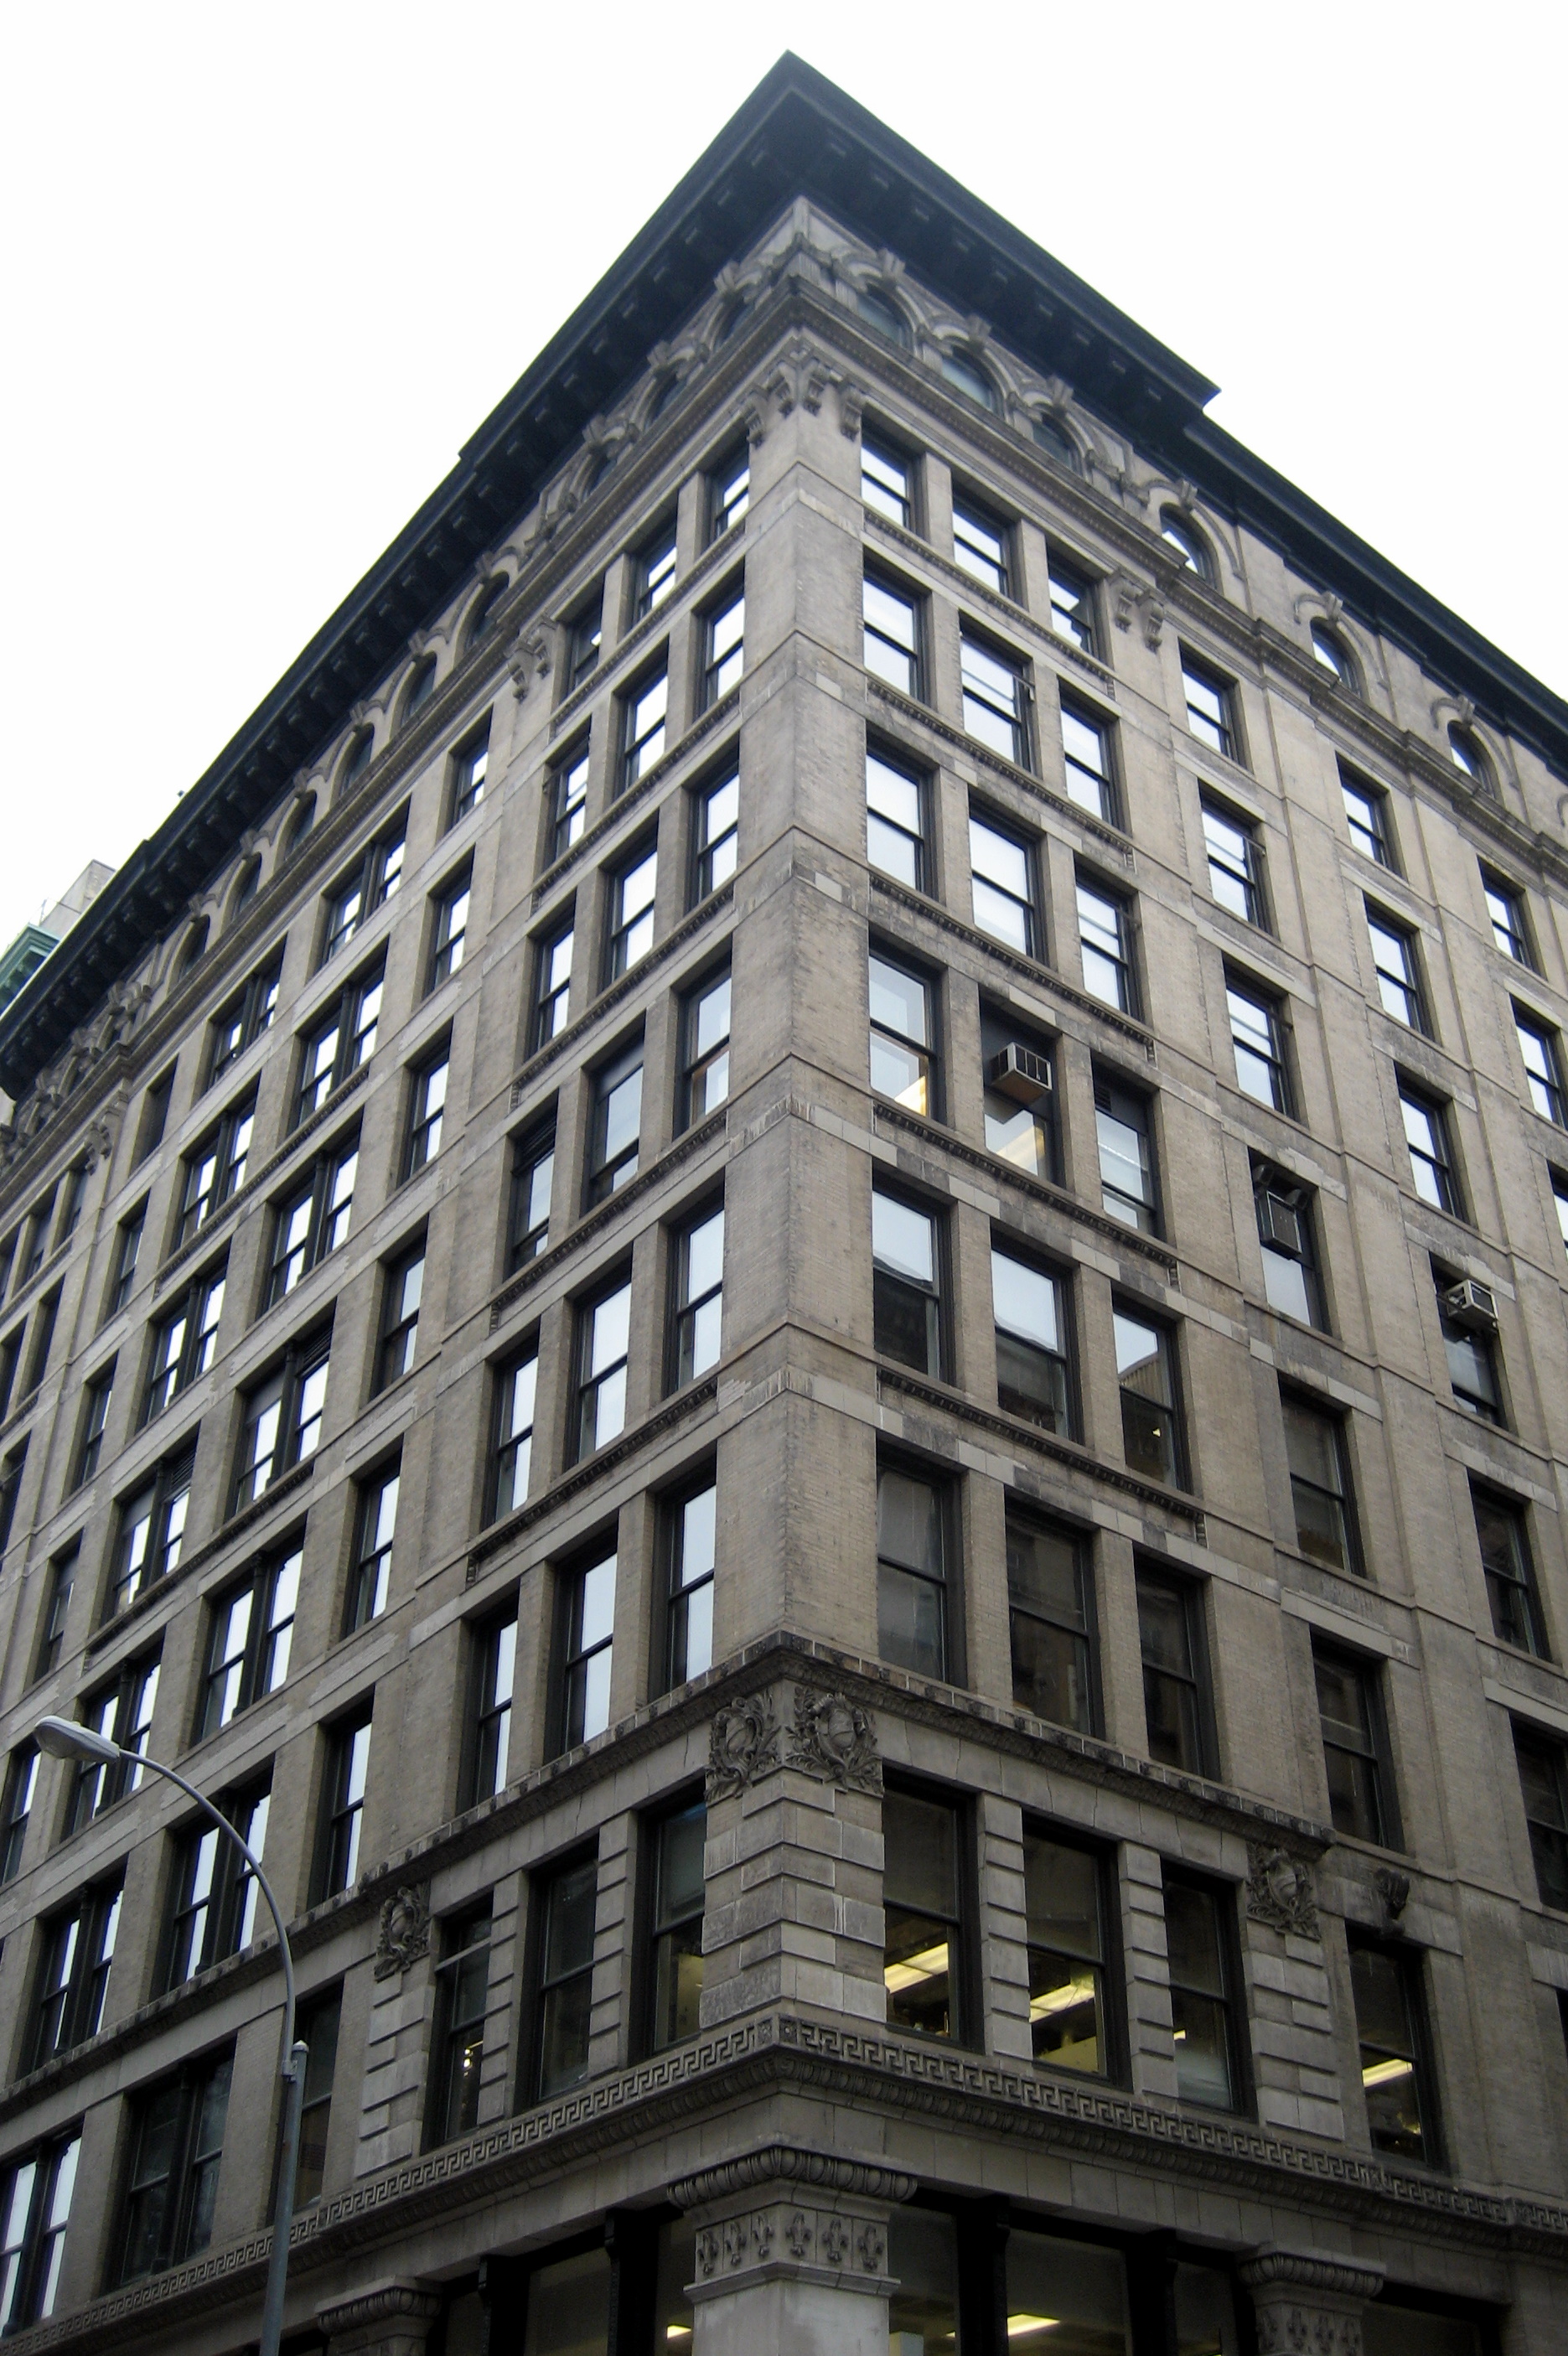 NYC - Greenwich Village: Brown Building / Triangle Shirtwaist Factory